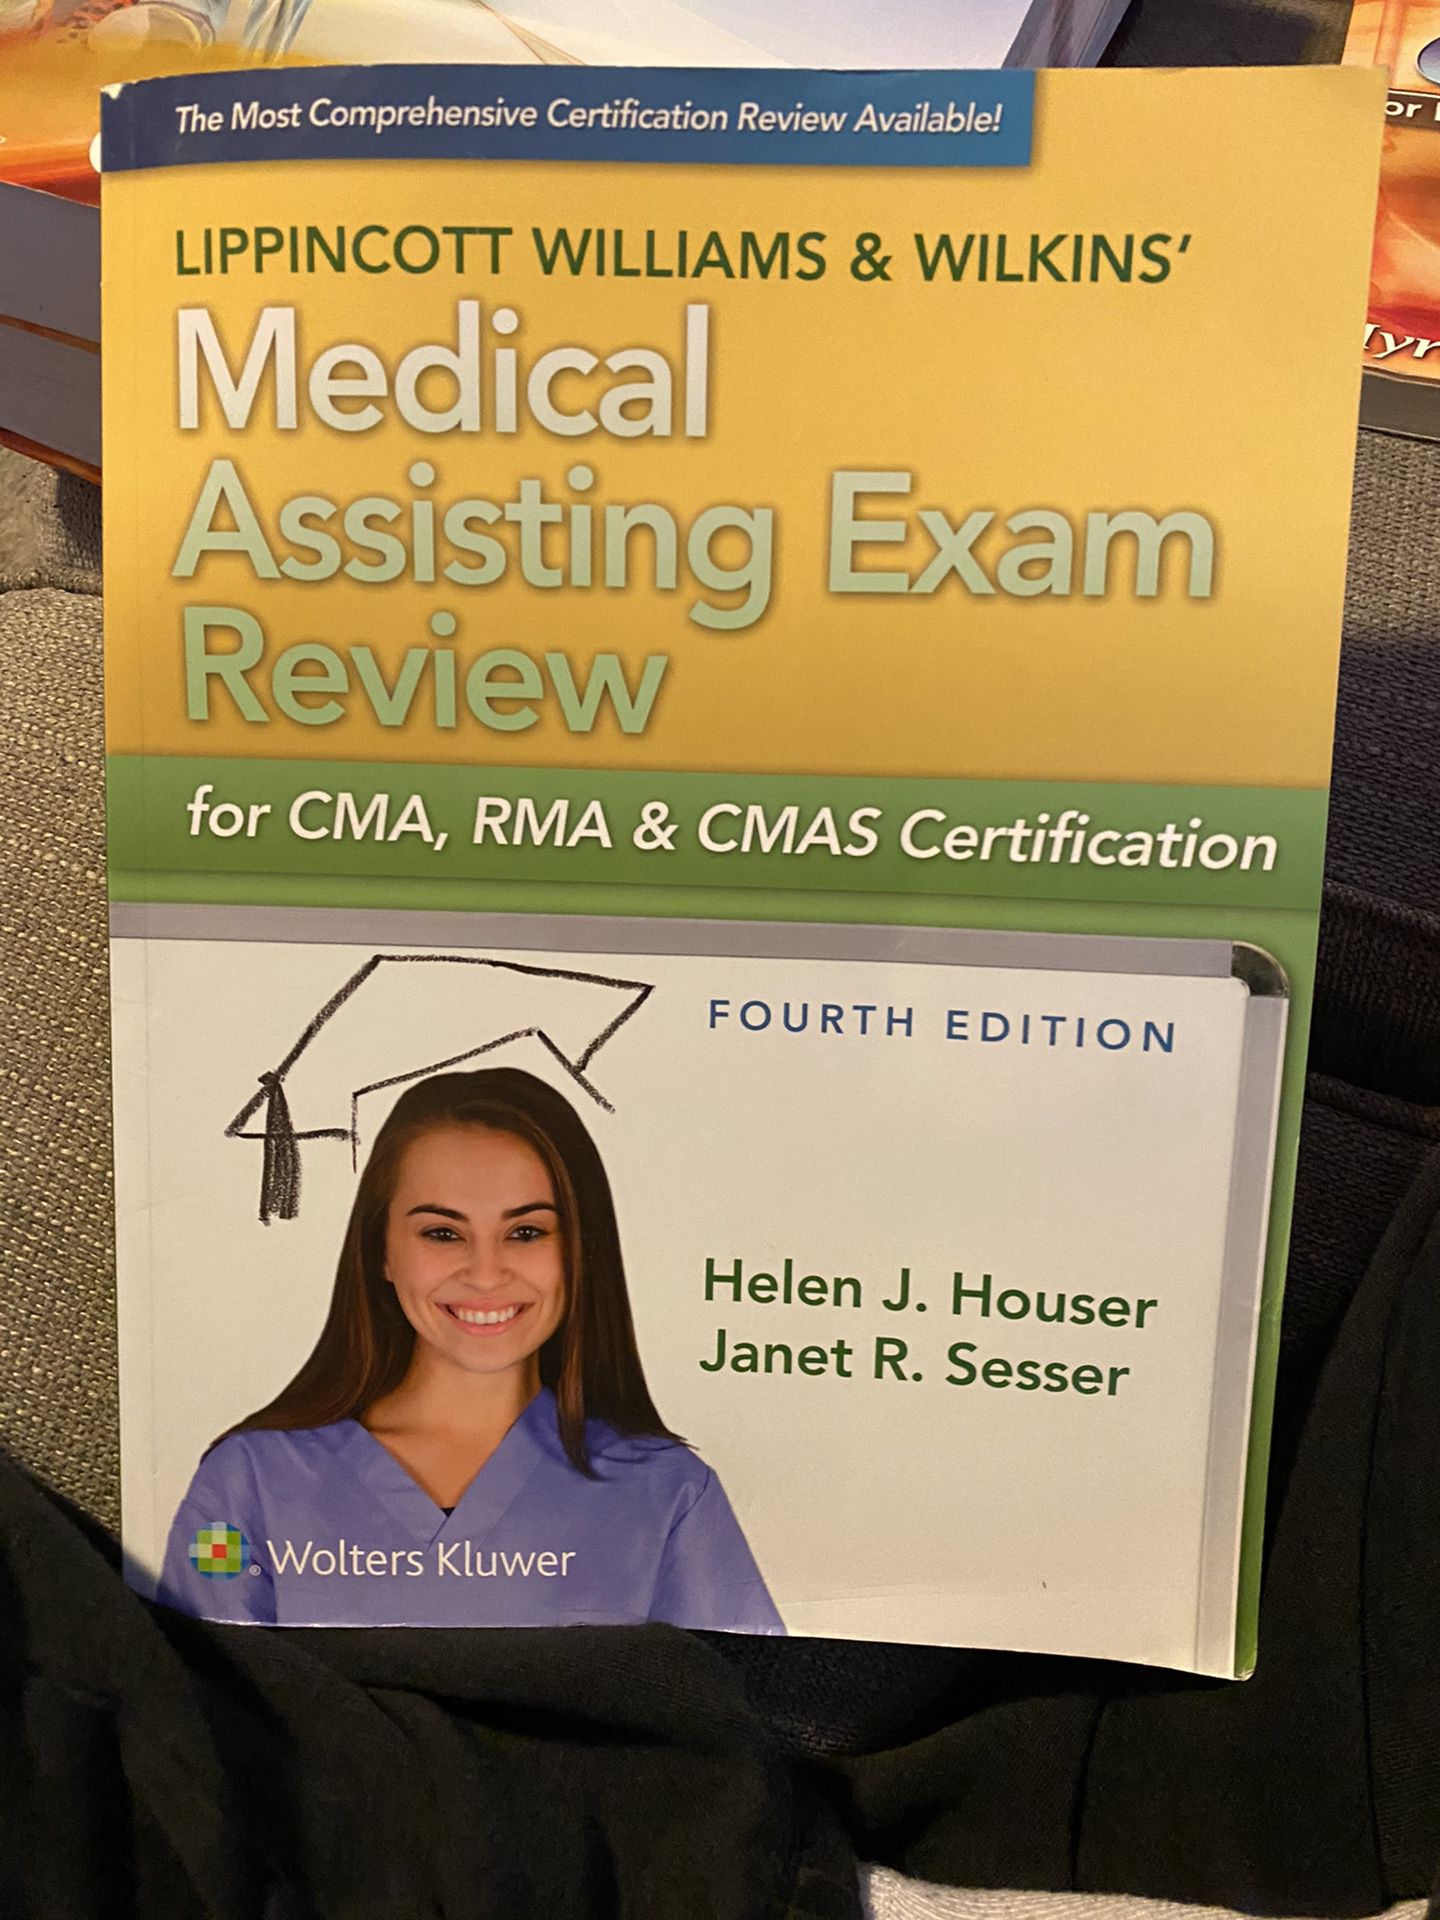 Medical assisting exam review